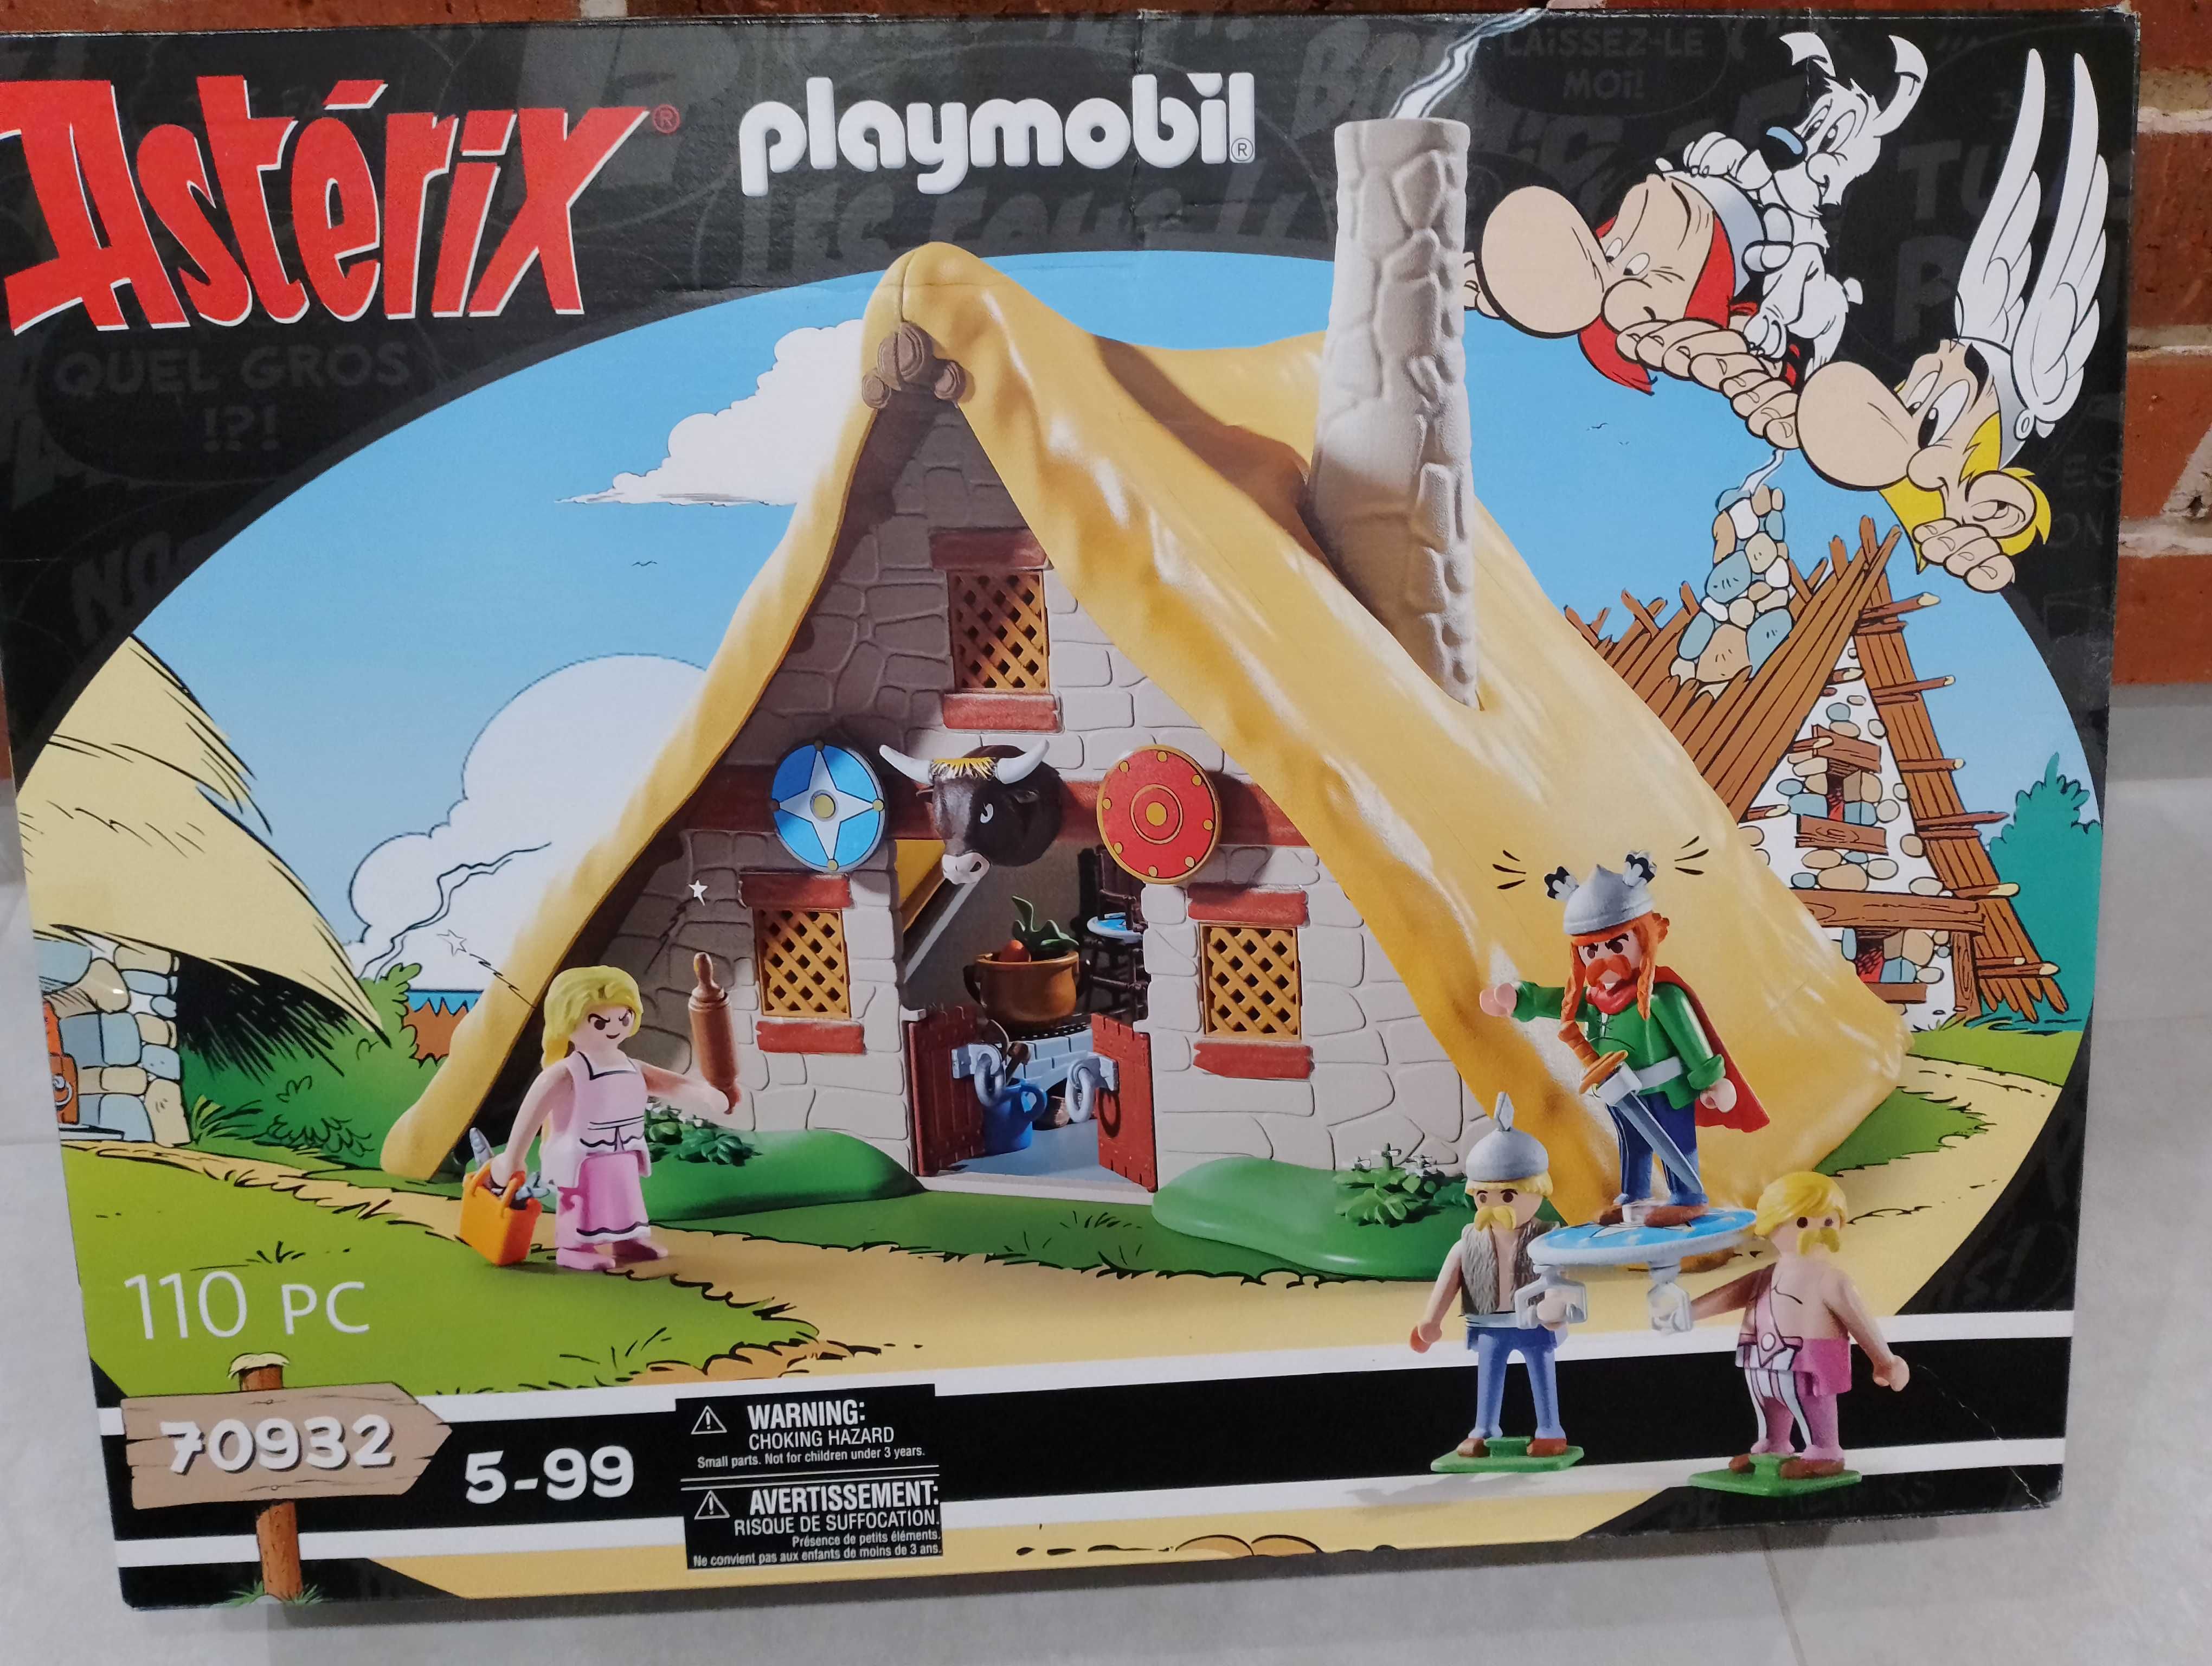 Playmobil Asterix zestaw 70932